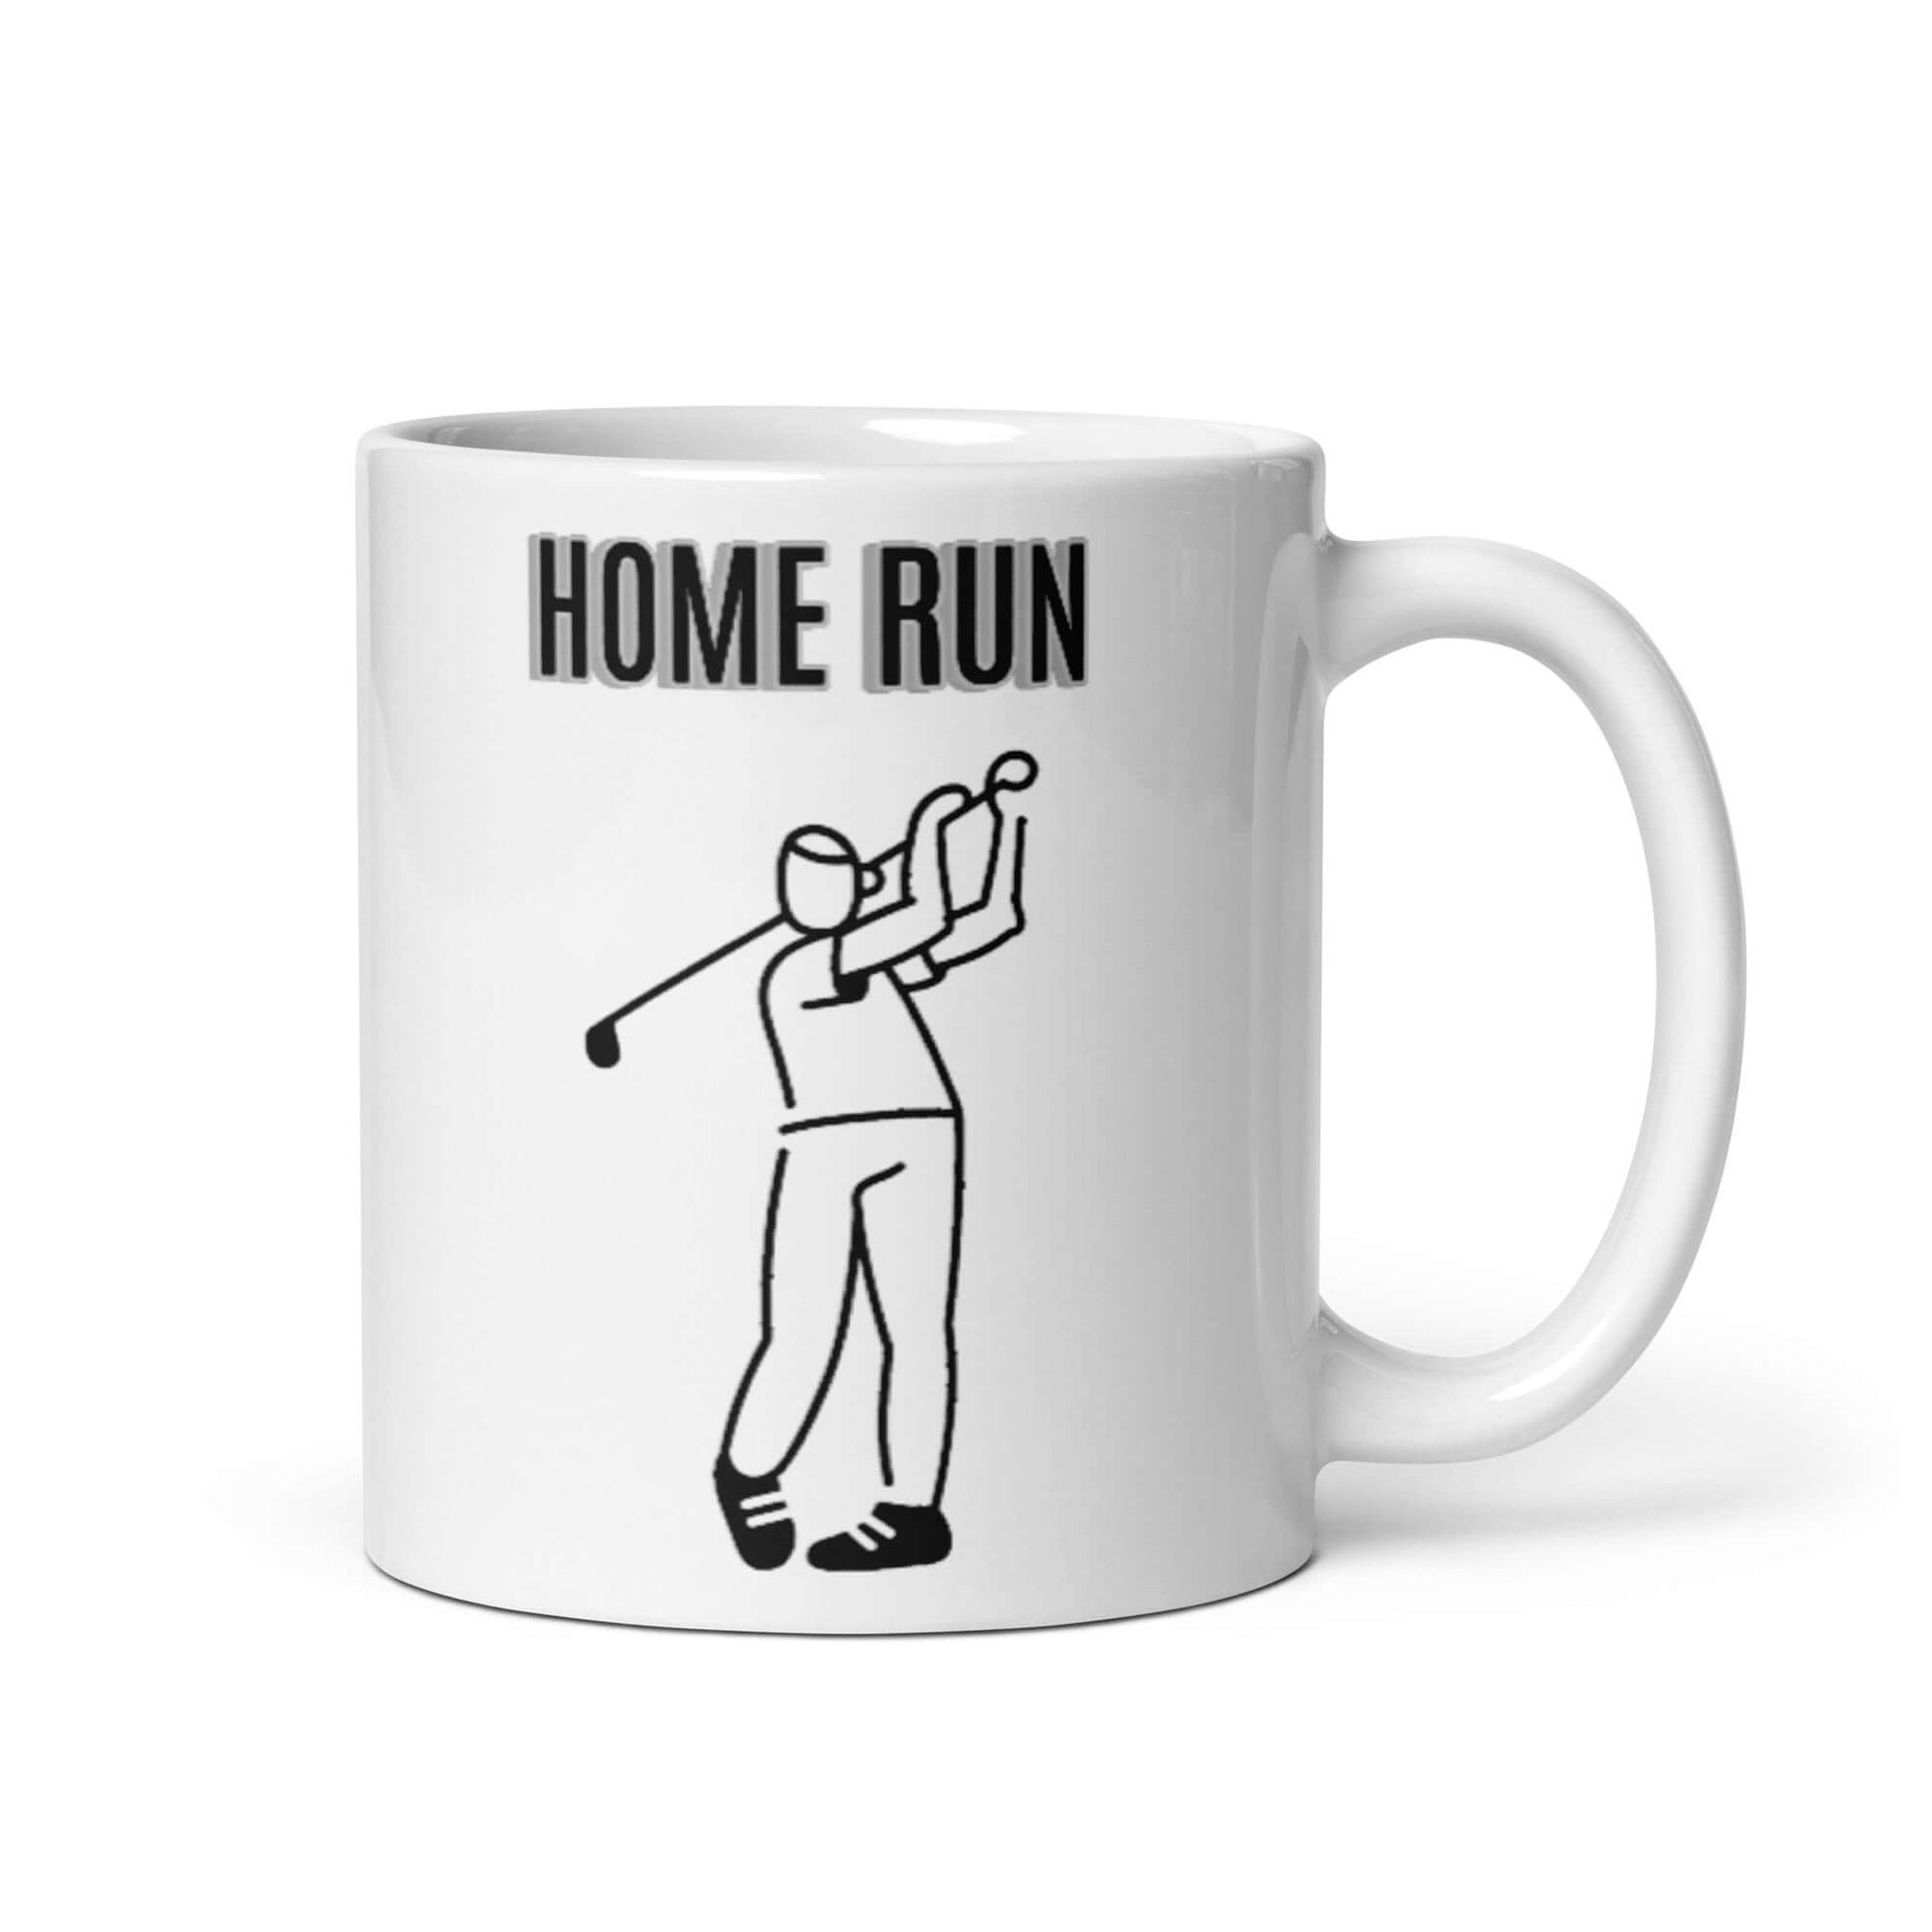 GOLF - HOME RUN! - White glossy mug - Horrible Designs